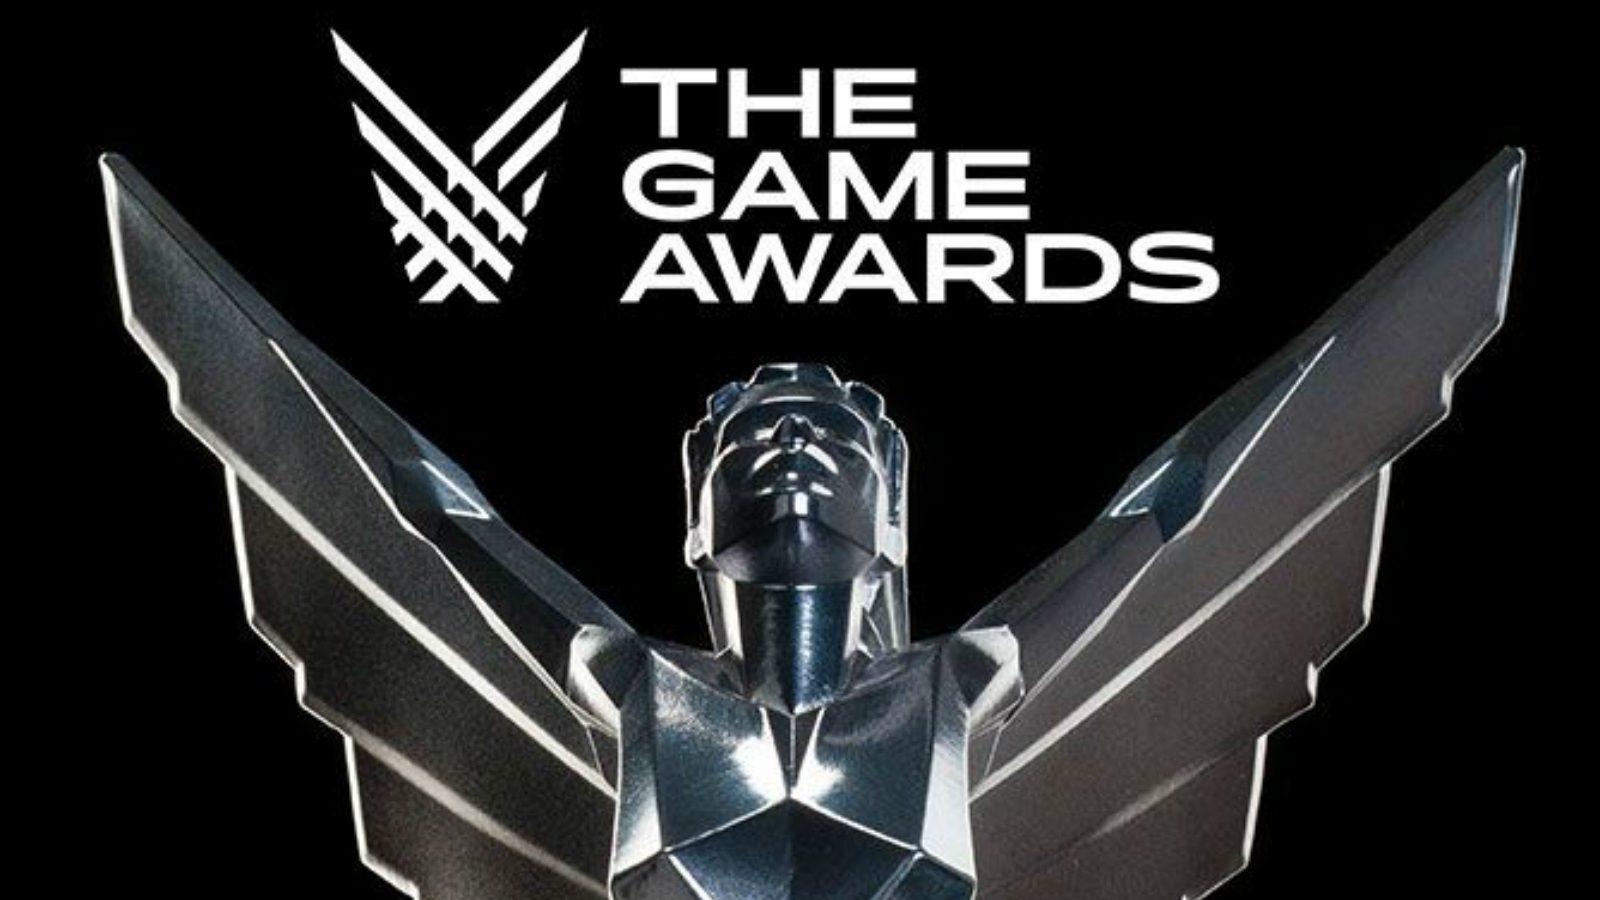 Australian Games Awards 2018: Finalists announced